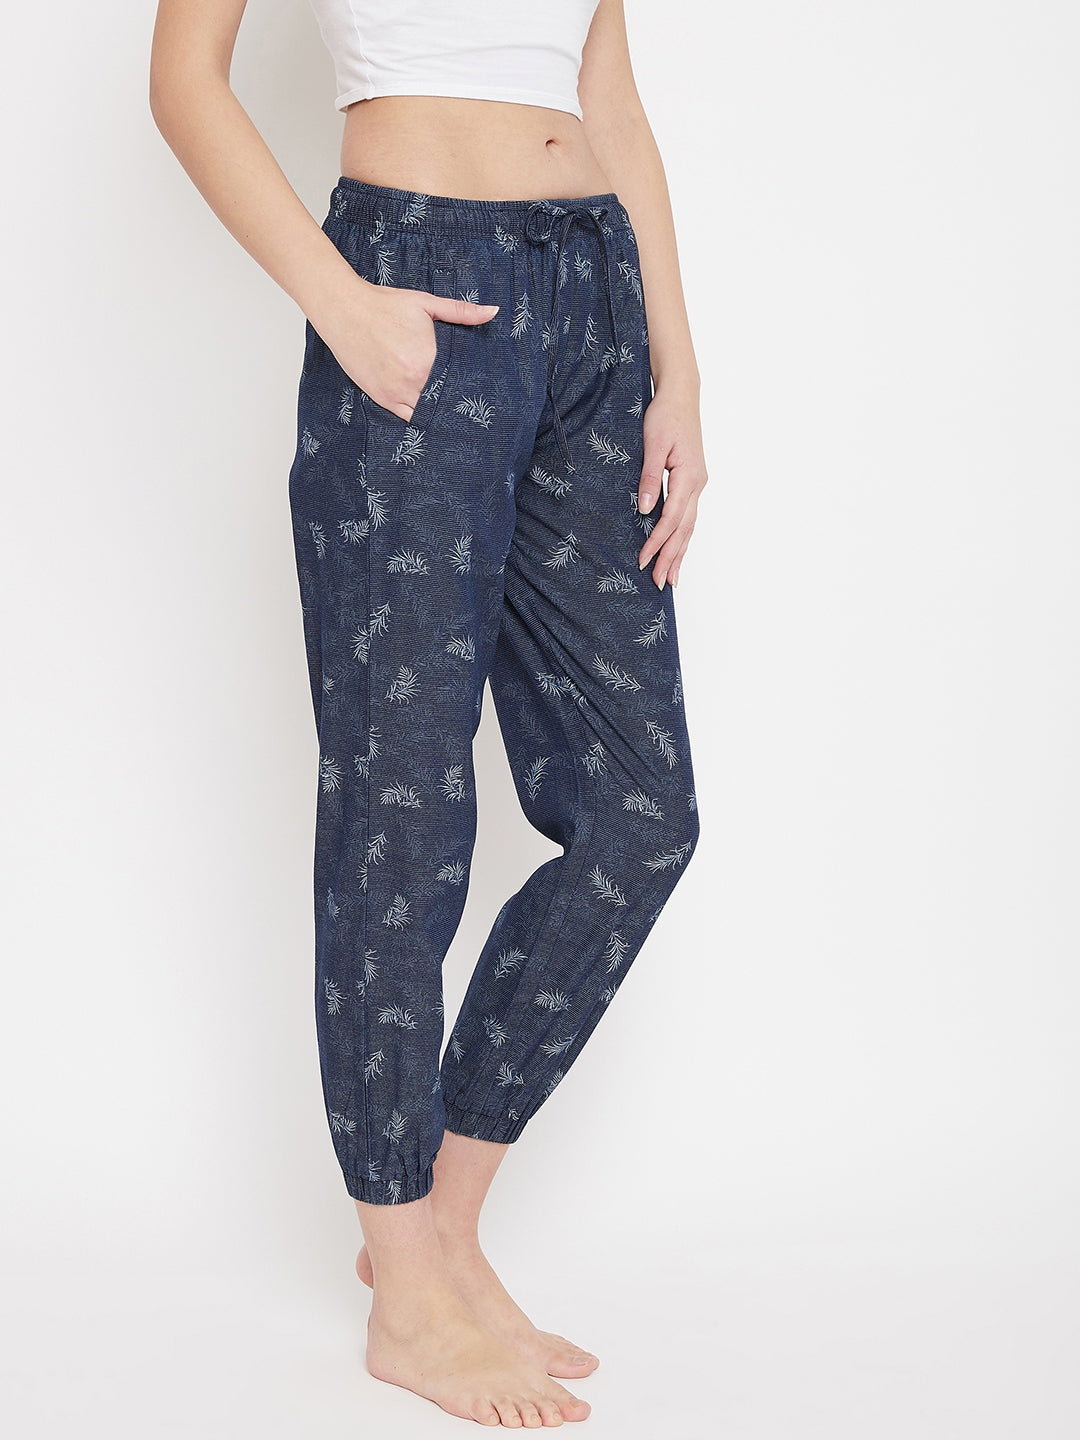 Navy Blue Printed Comfort Fit Lounge Pants - Women Lounge Pants